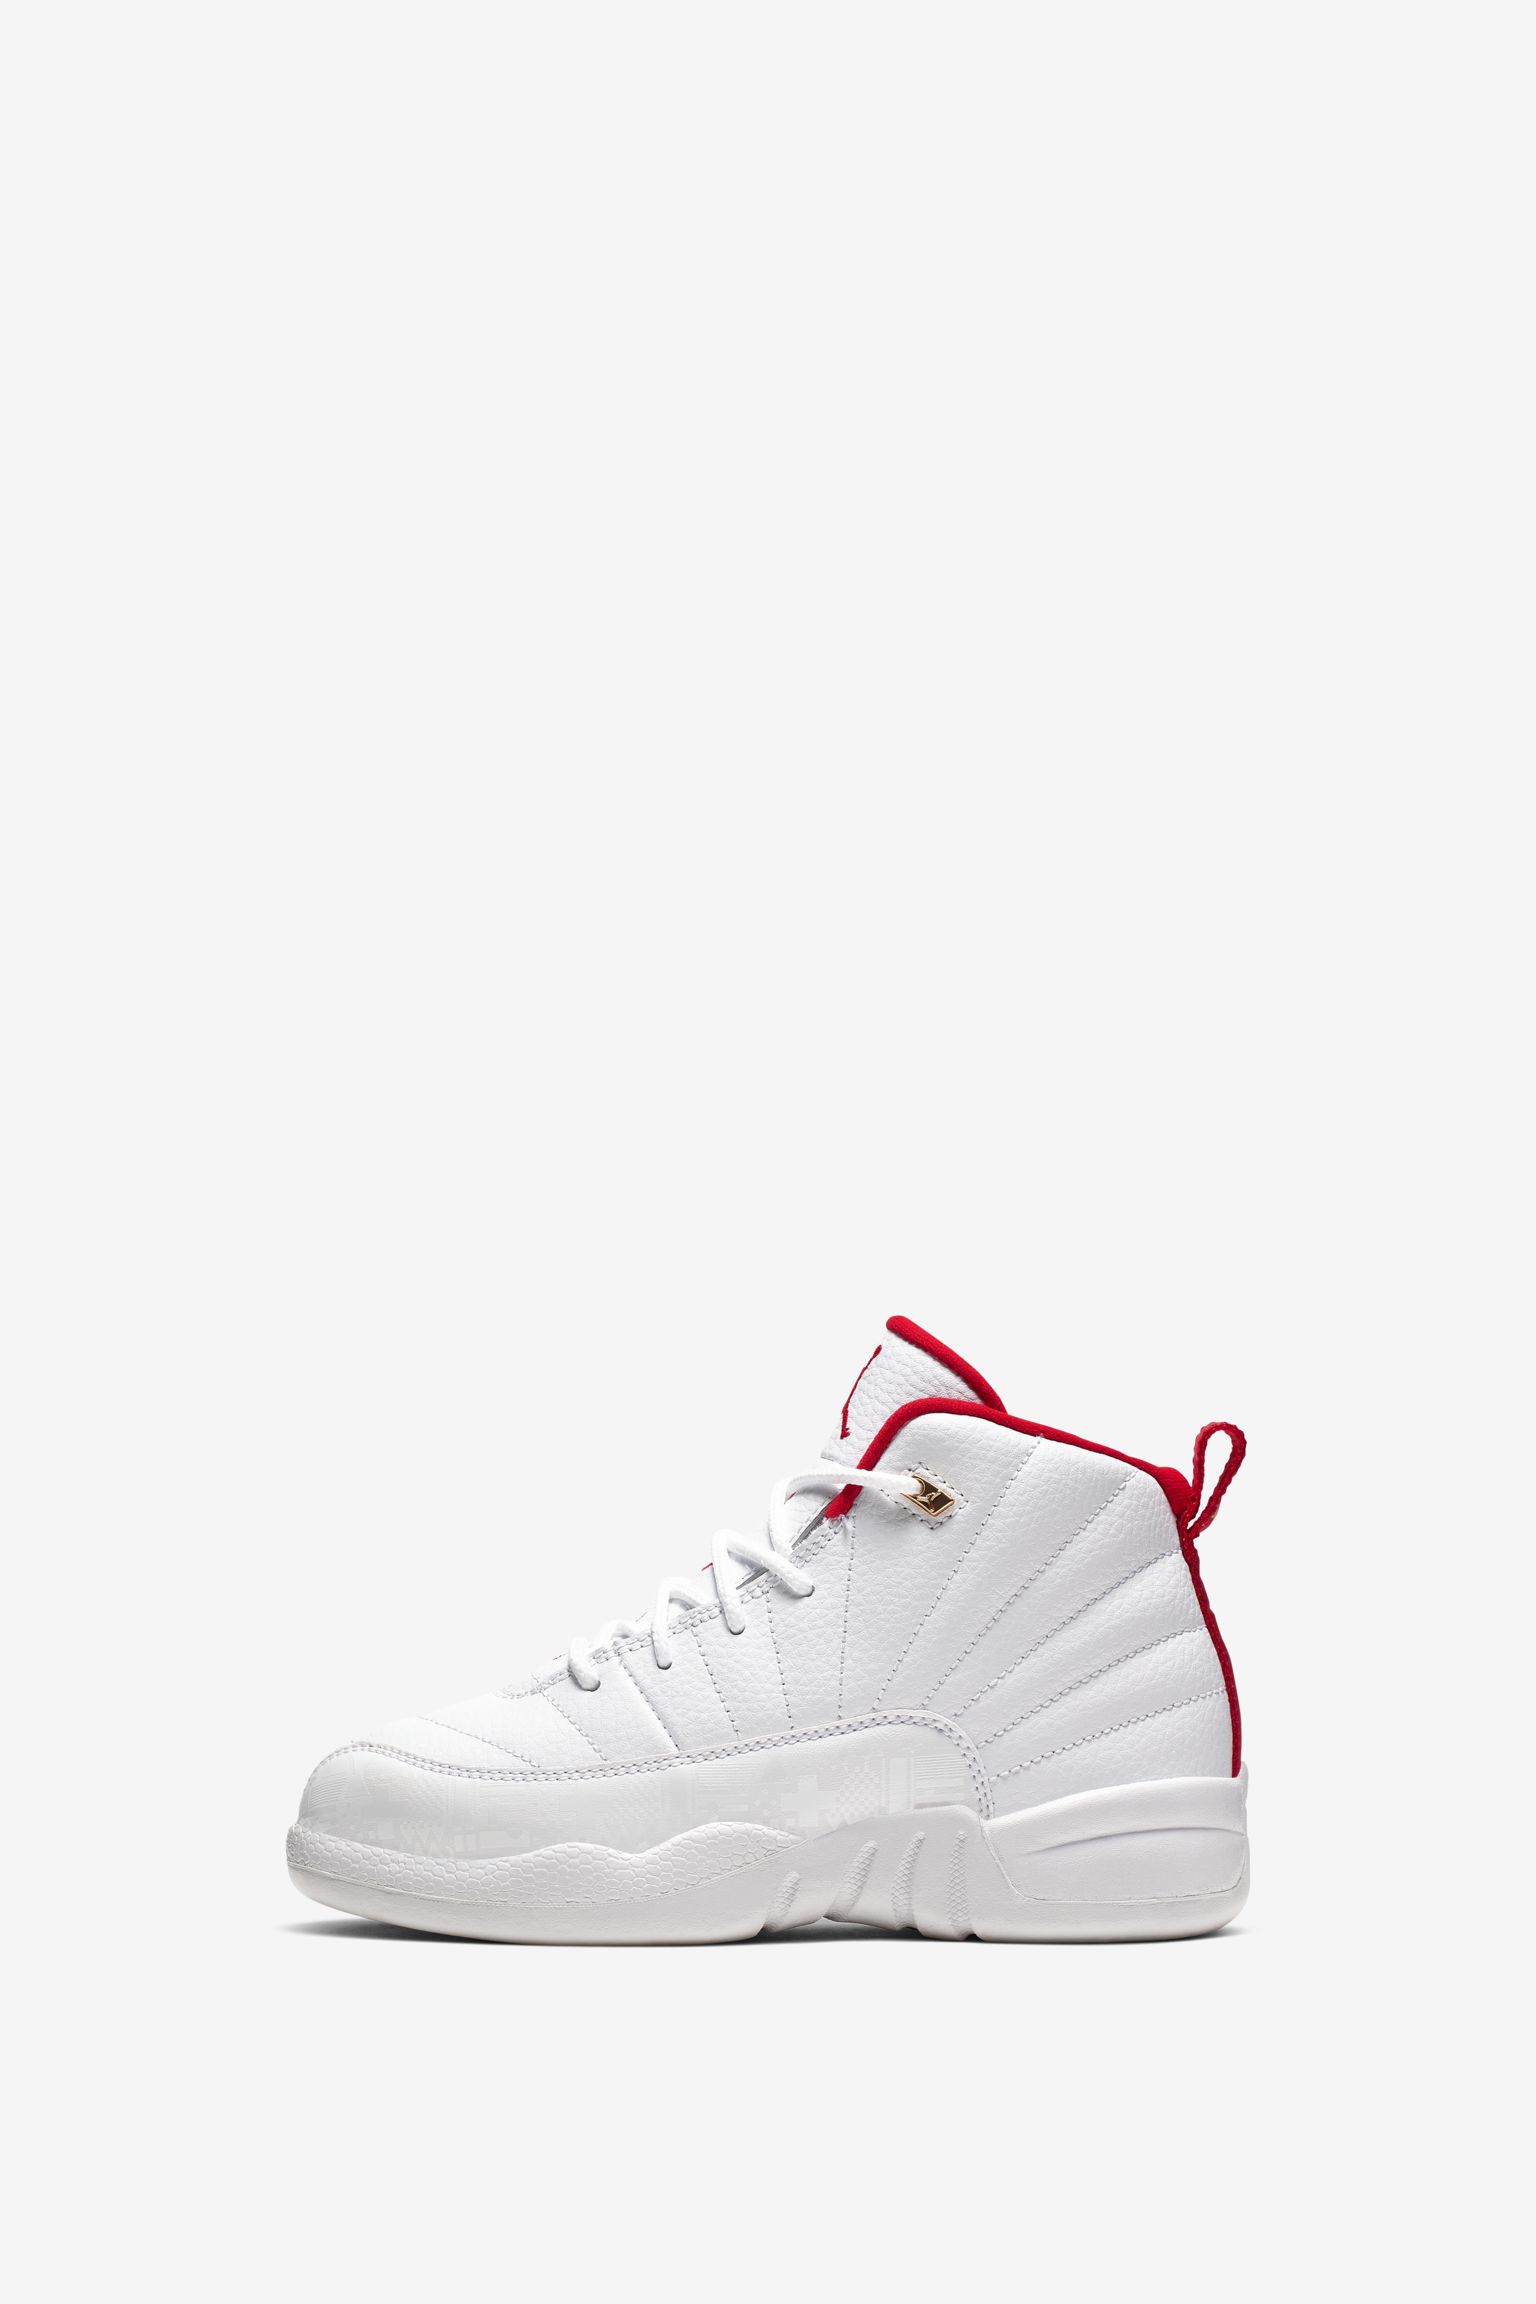 Jordan XII 'White/University Red' Release Nike SNKRS